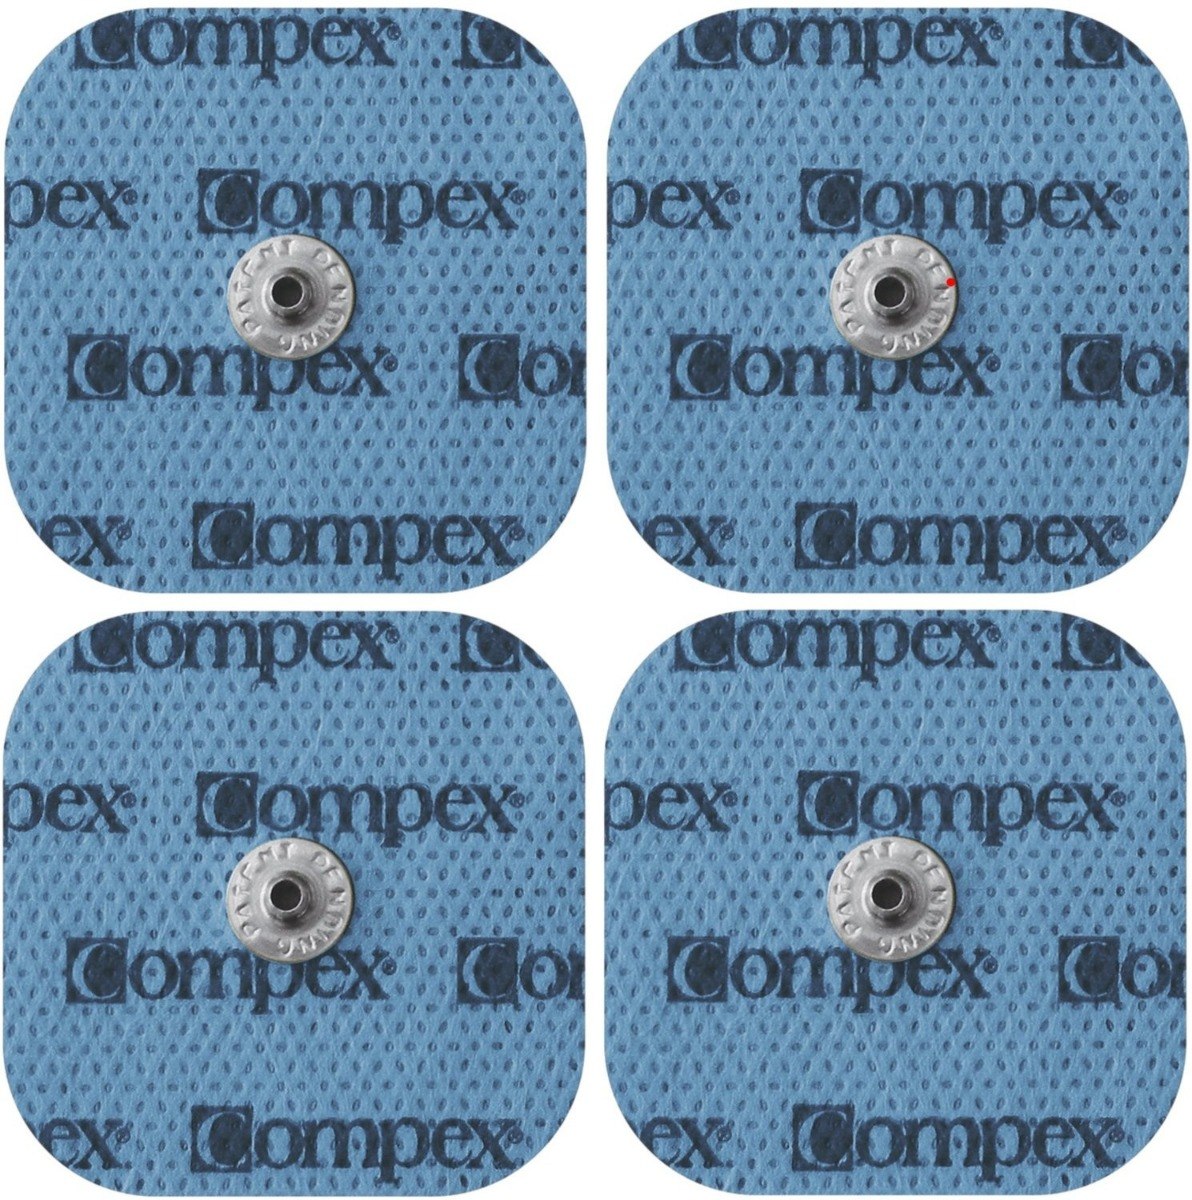 Electrodos Compex Performance Snap 5x10 mm 1 Snap (bolsa de 2 unidades)